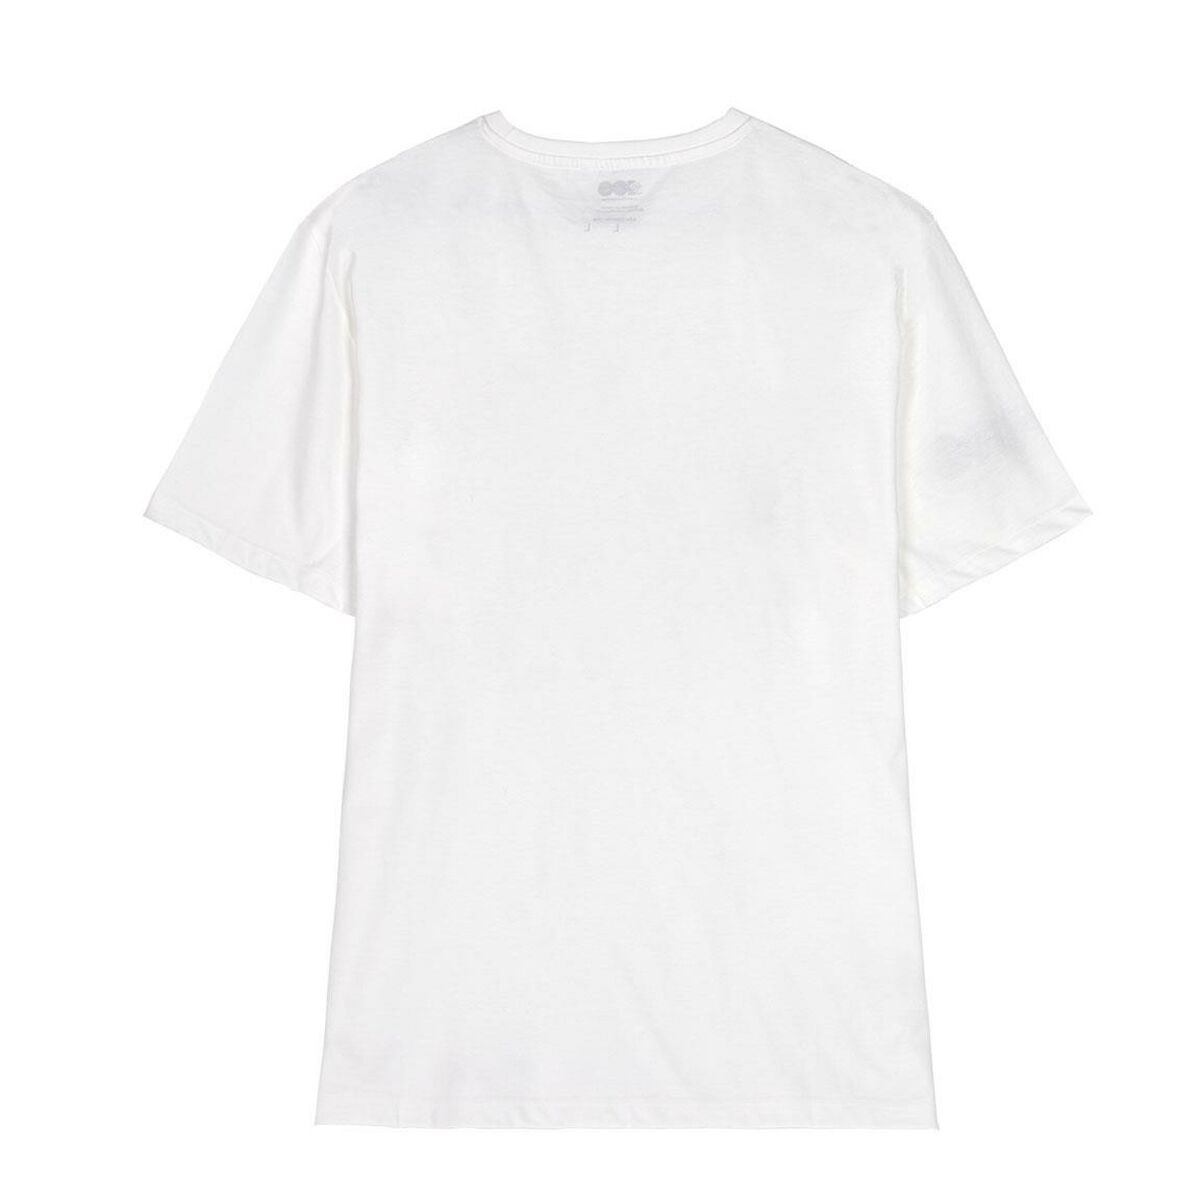 T-shirt à manches courtes homme Warner Bros Blanc